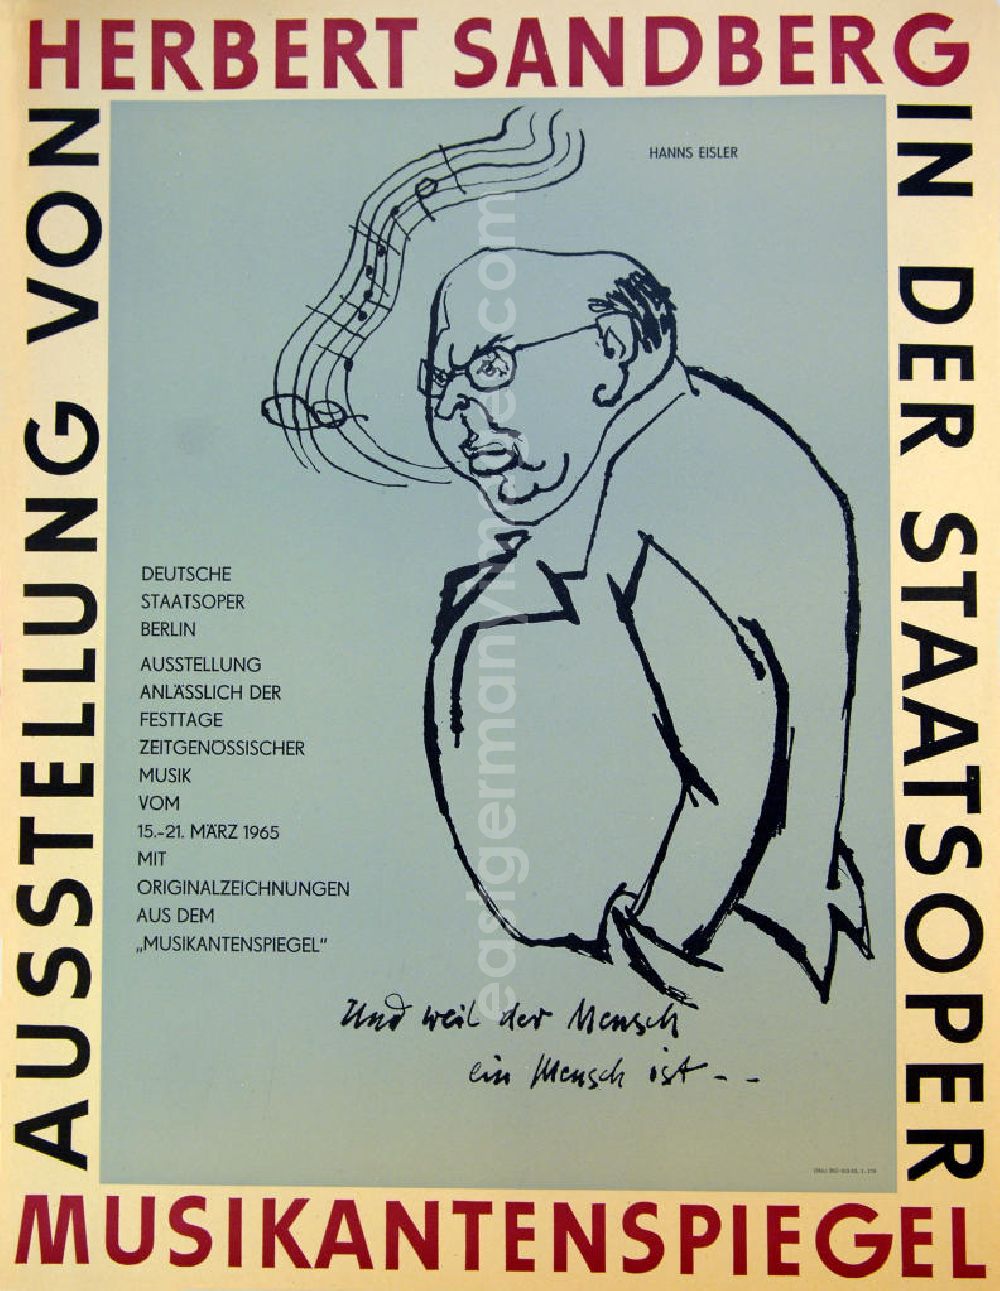 GDR picture archive: Berlin - Plakat der Ausstellung Musikantenspiegel über Herbert Sandberg vom 15.-21.03.1965 Deutsche Staatsoper Berlin, 40,5x53,